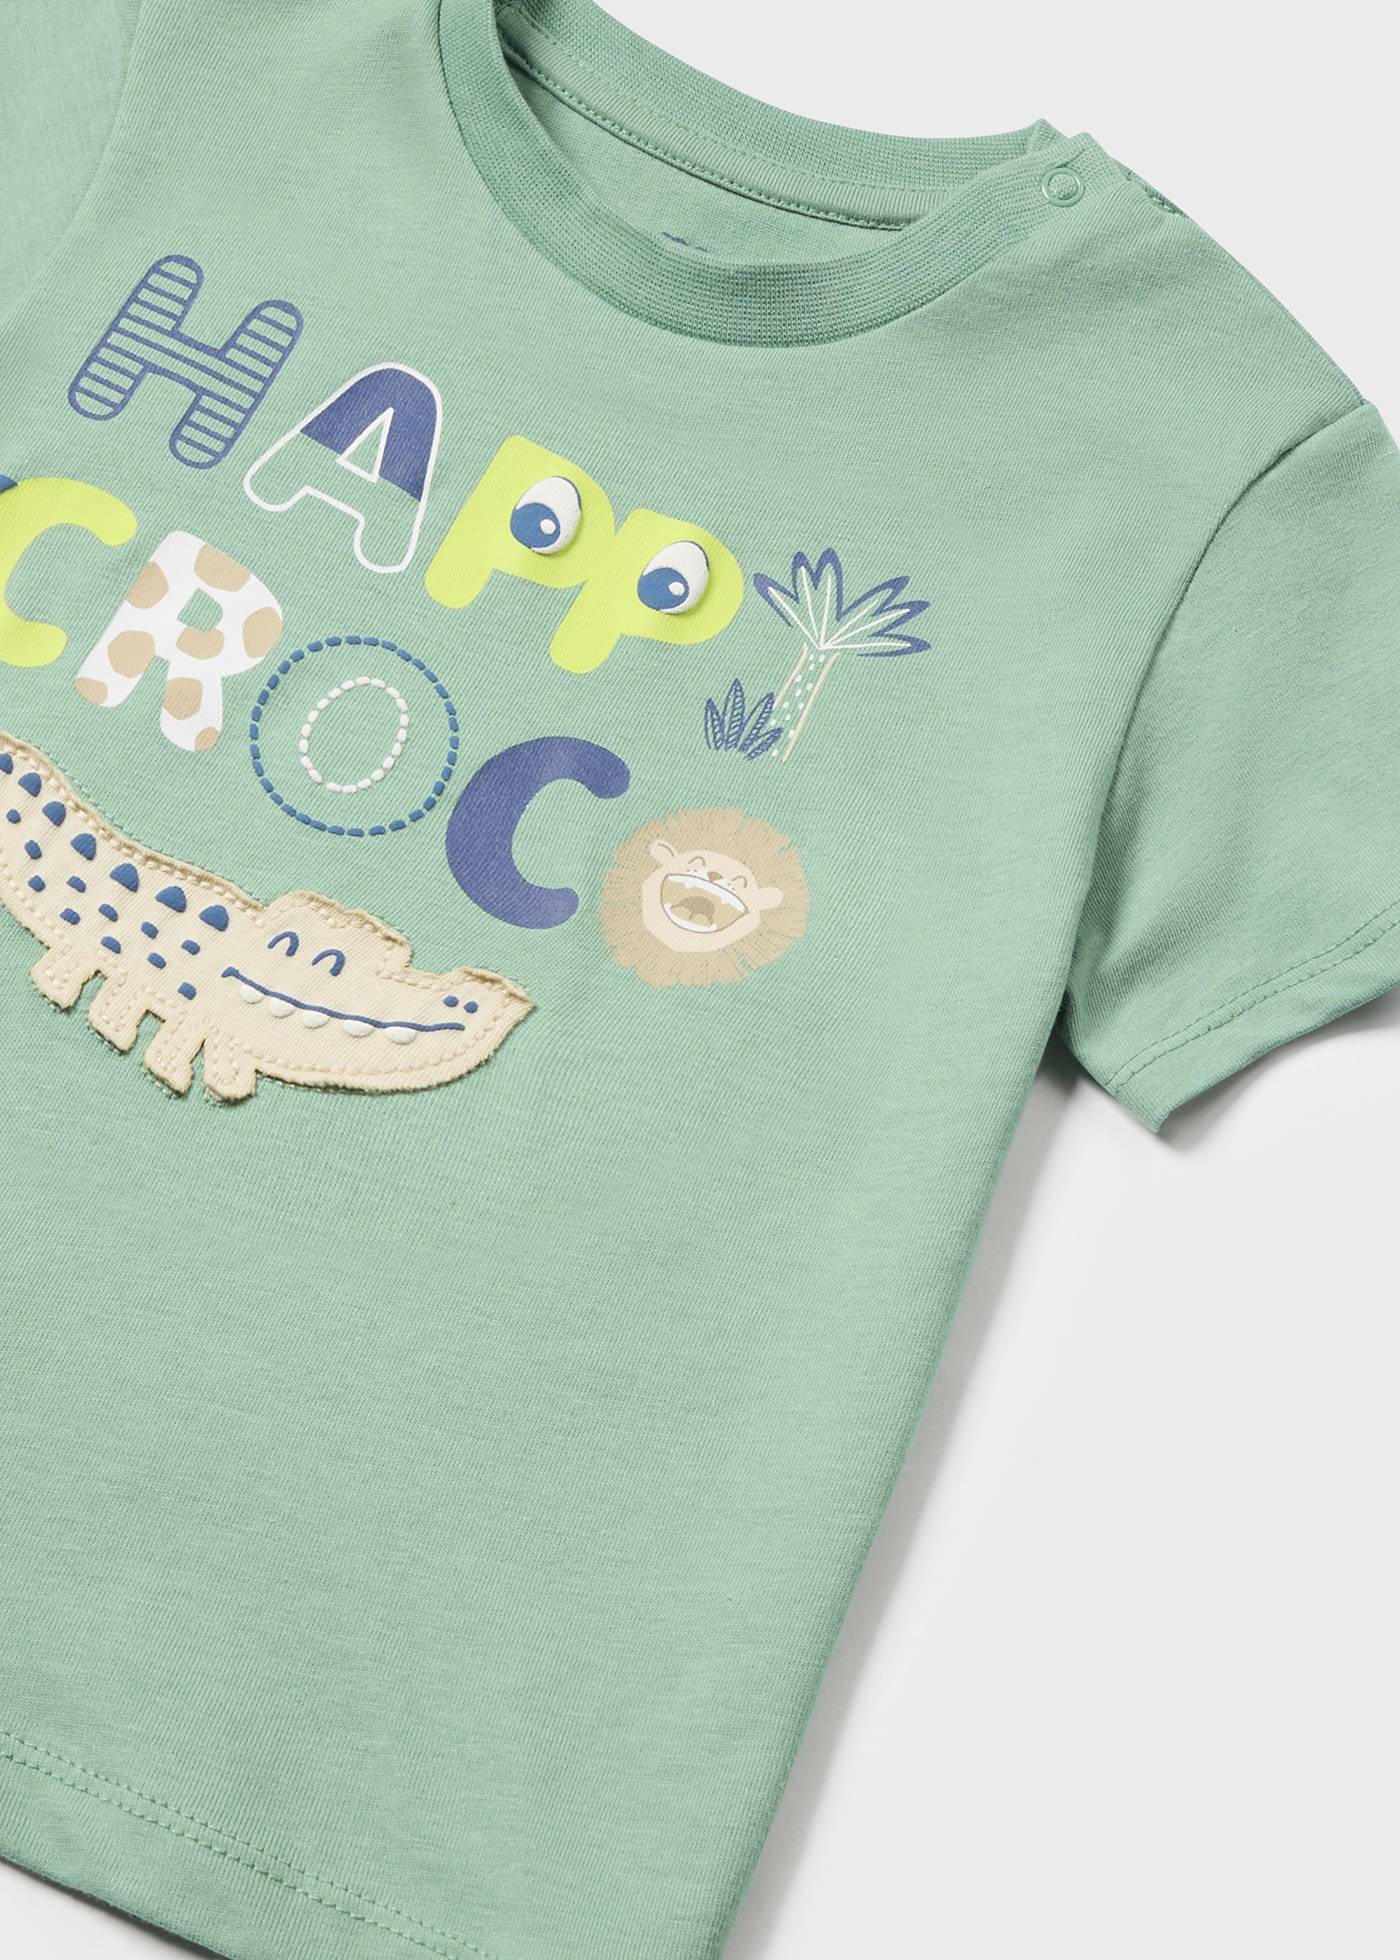 Baby Crocodile T-Shirt Better Cotton